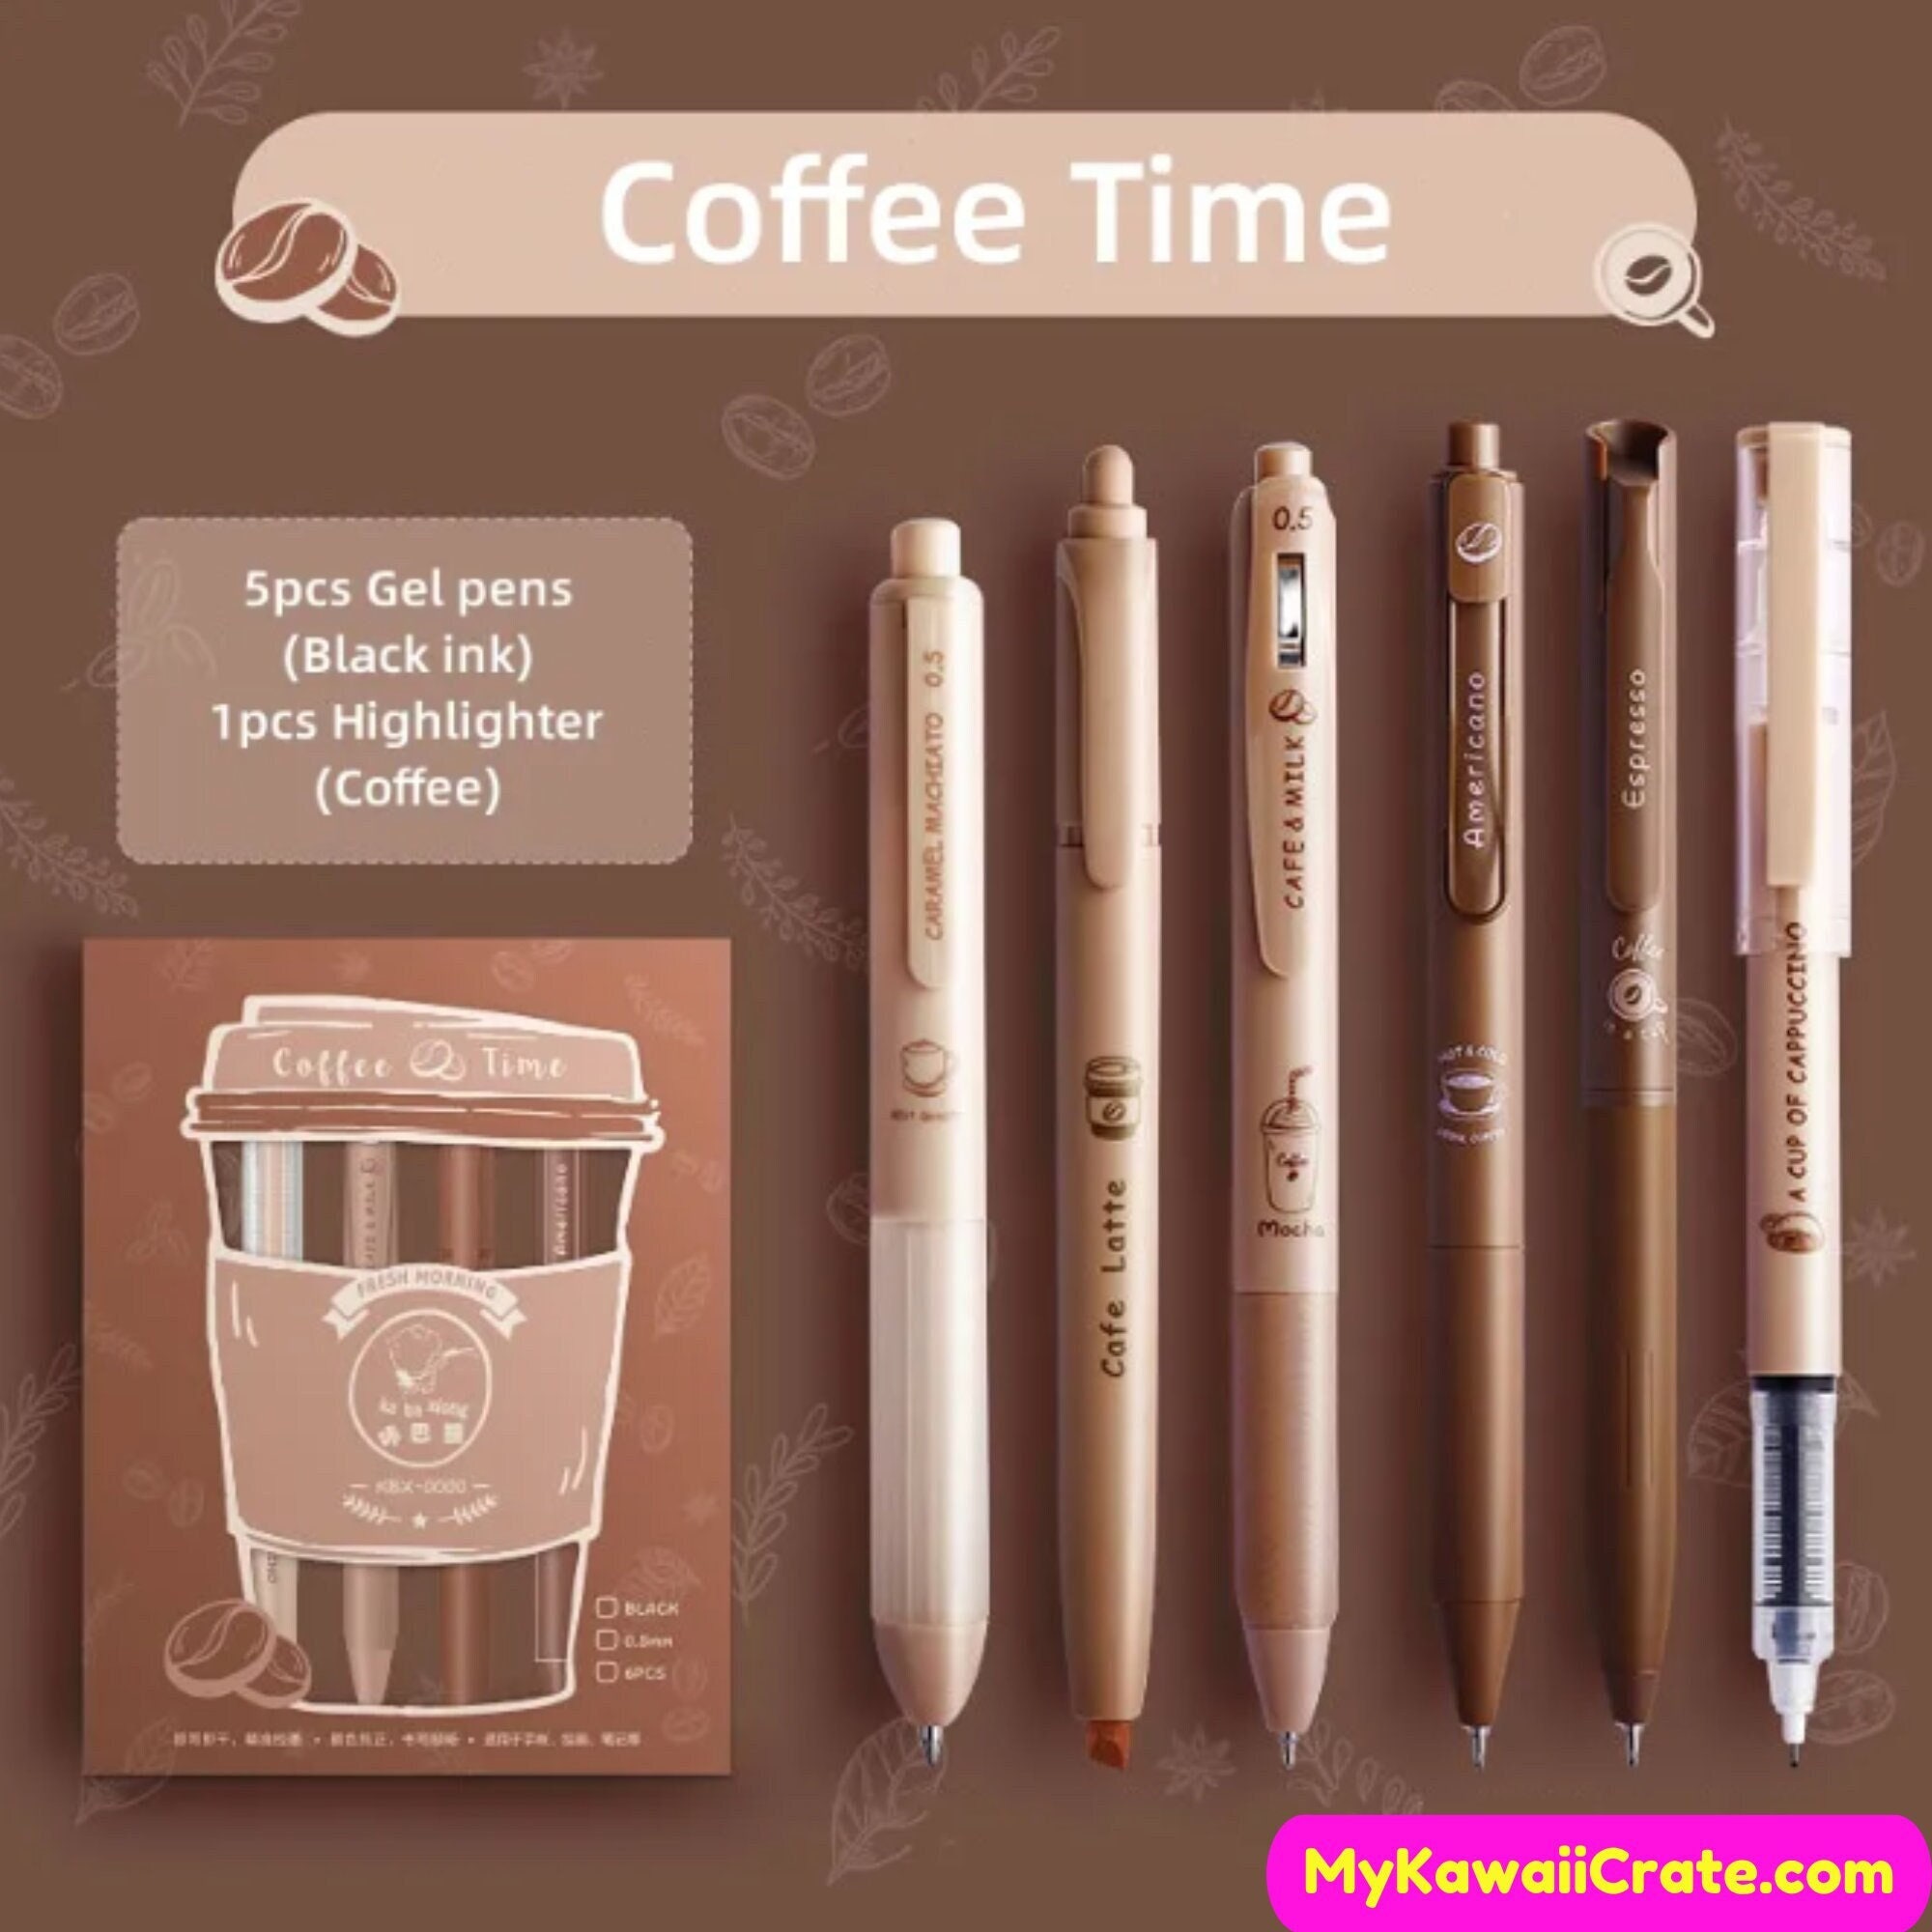 Hadanceo Latte Art Pen Reusable Non-slip DIY Crafts Food Grade PP Electric  Coffee Carving Pen Baking Accessories